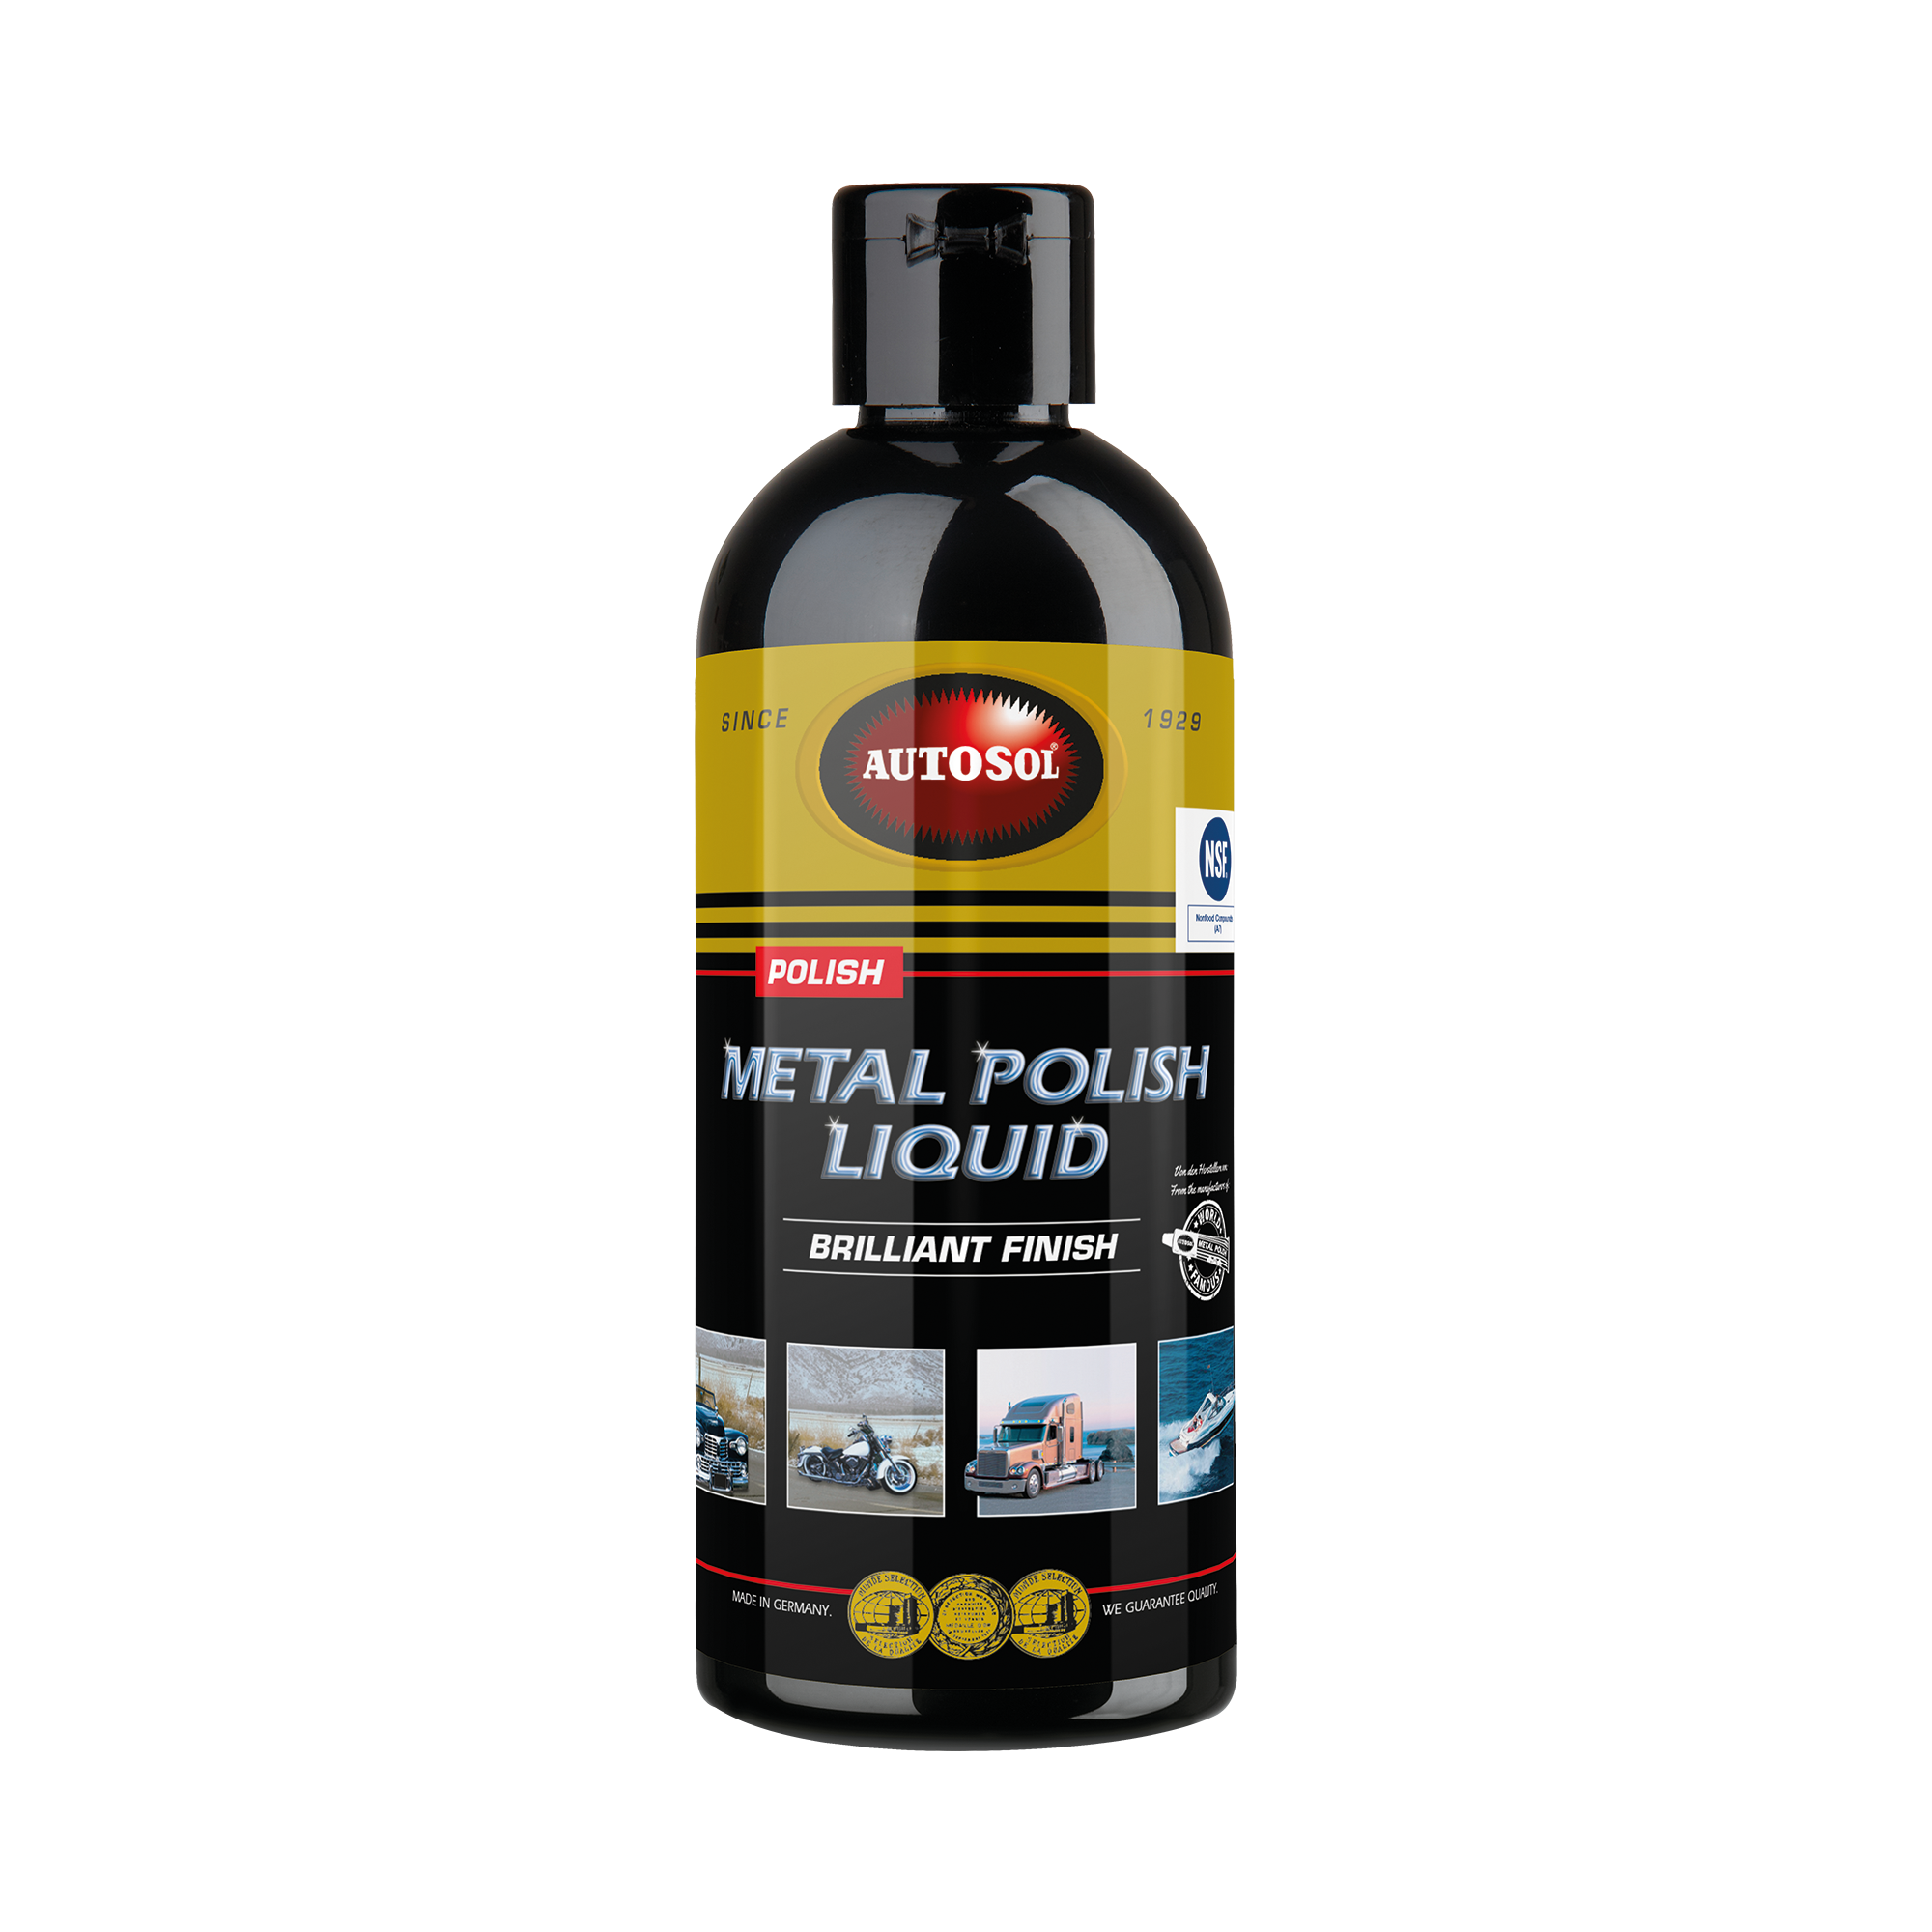 AUTOSOL® Metal Polish Liquid – Nordic supplier of AUTOSOL products .